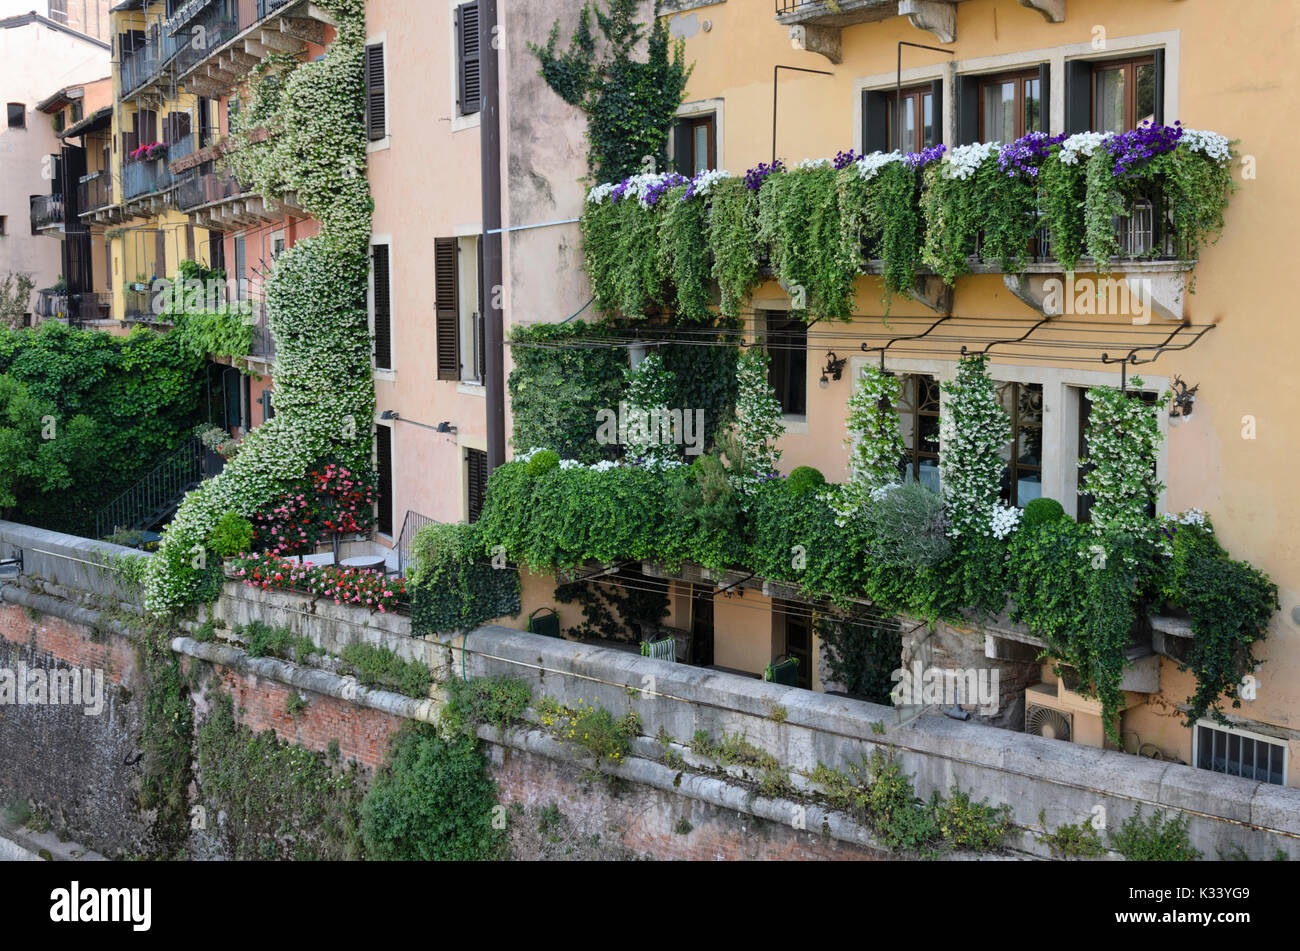 Balconies with star jasmines (Trachelospermum), petunias (Petunia) and pelargoniums (Pelargonium), Verona, Italy Stock Photo